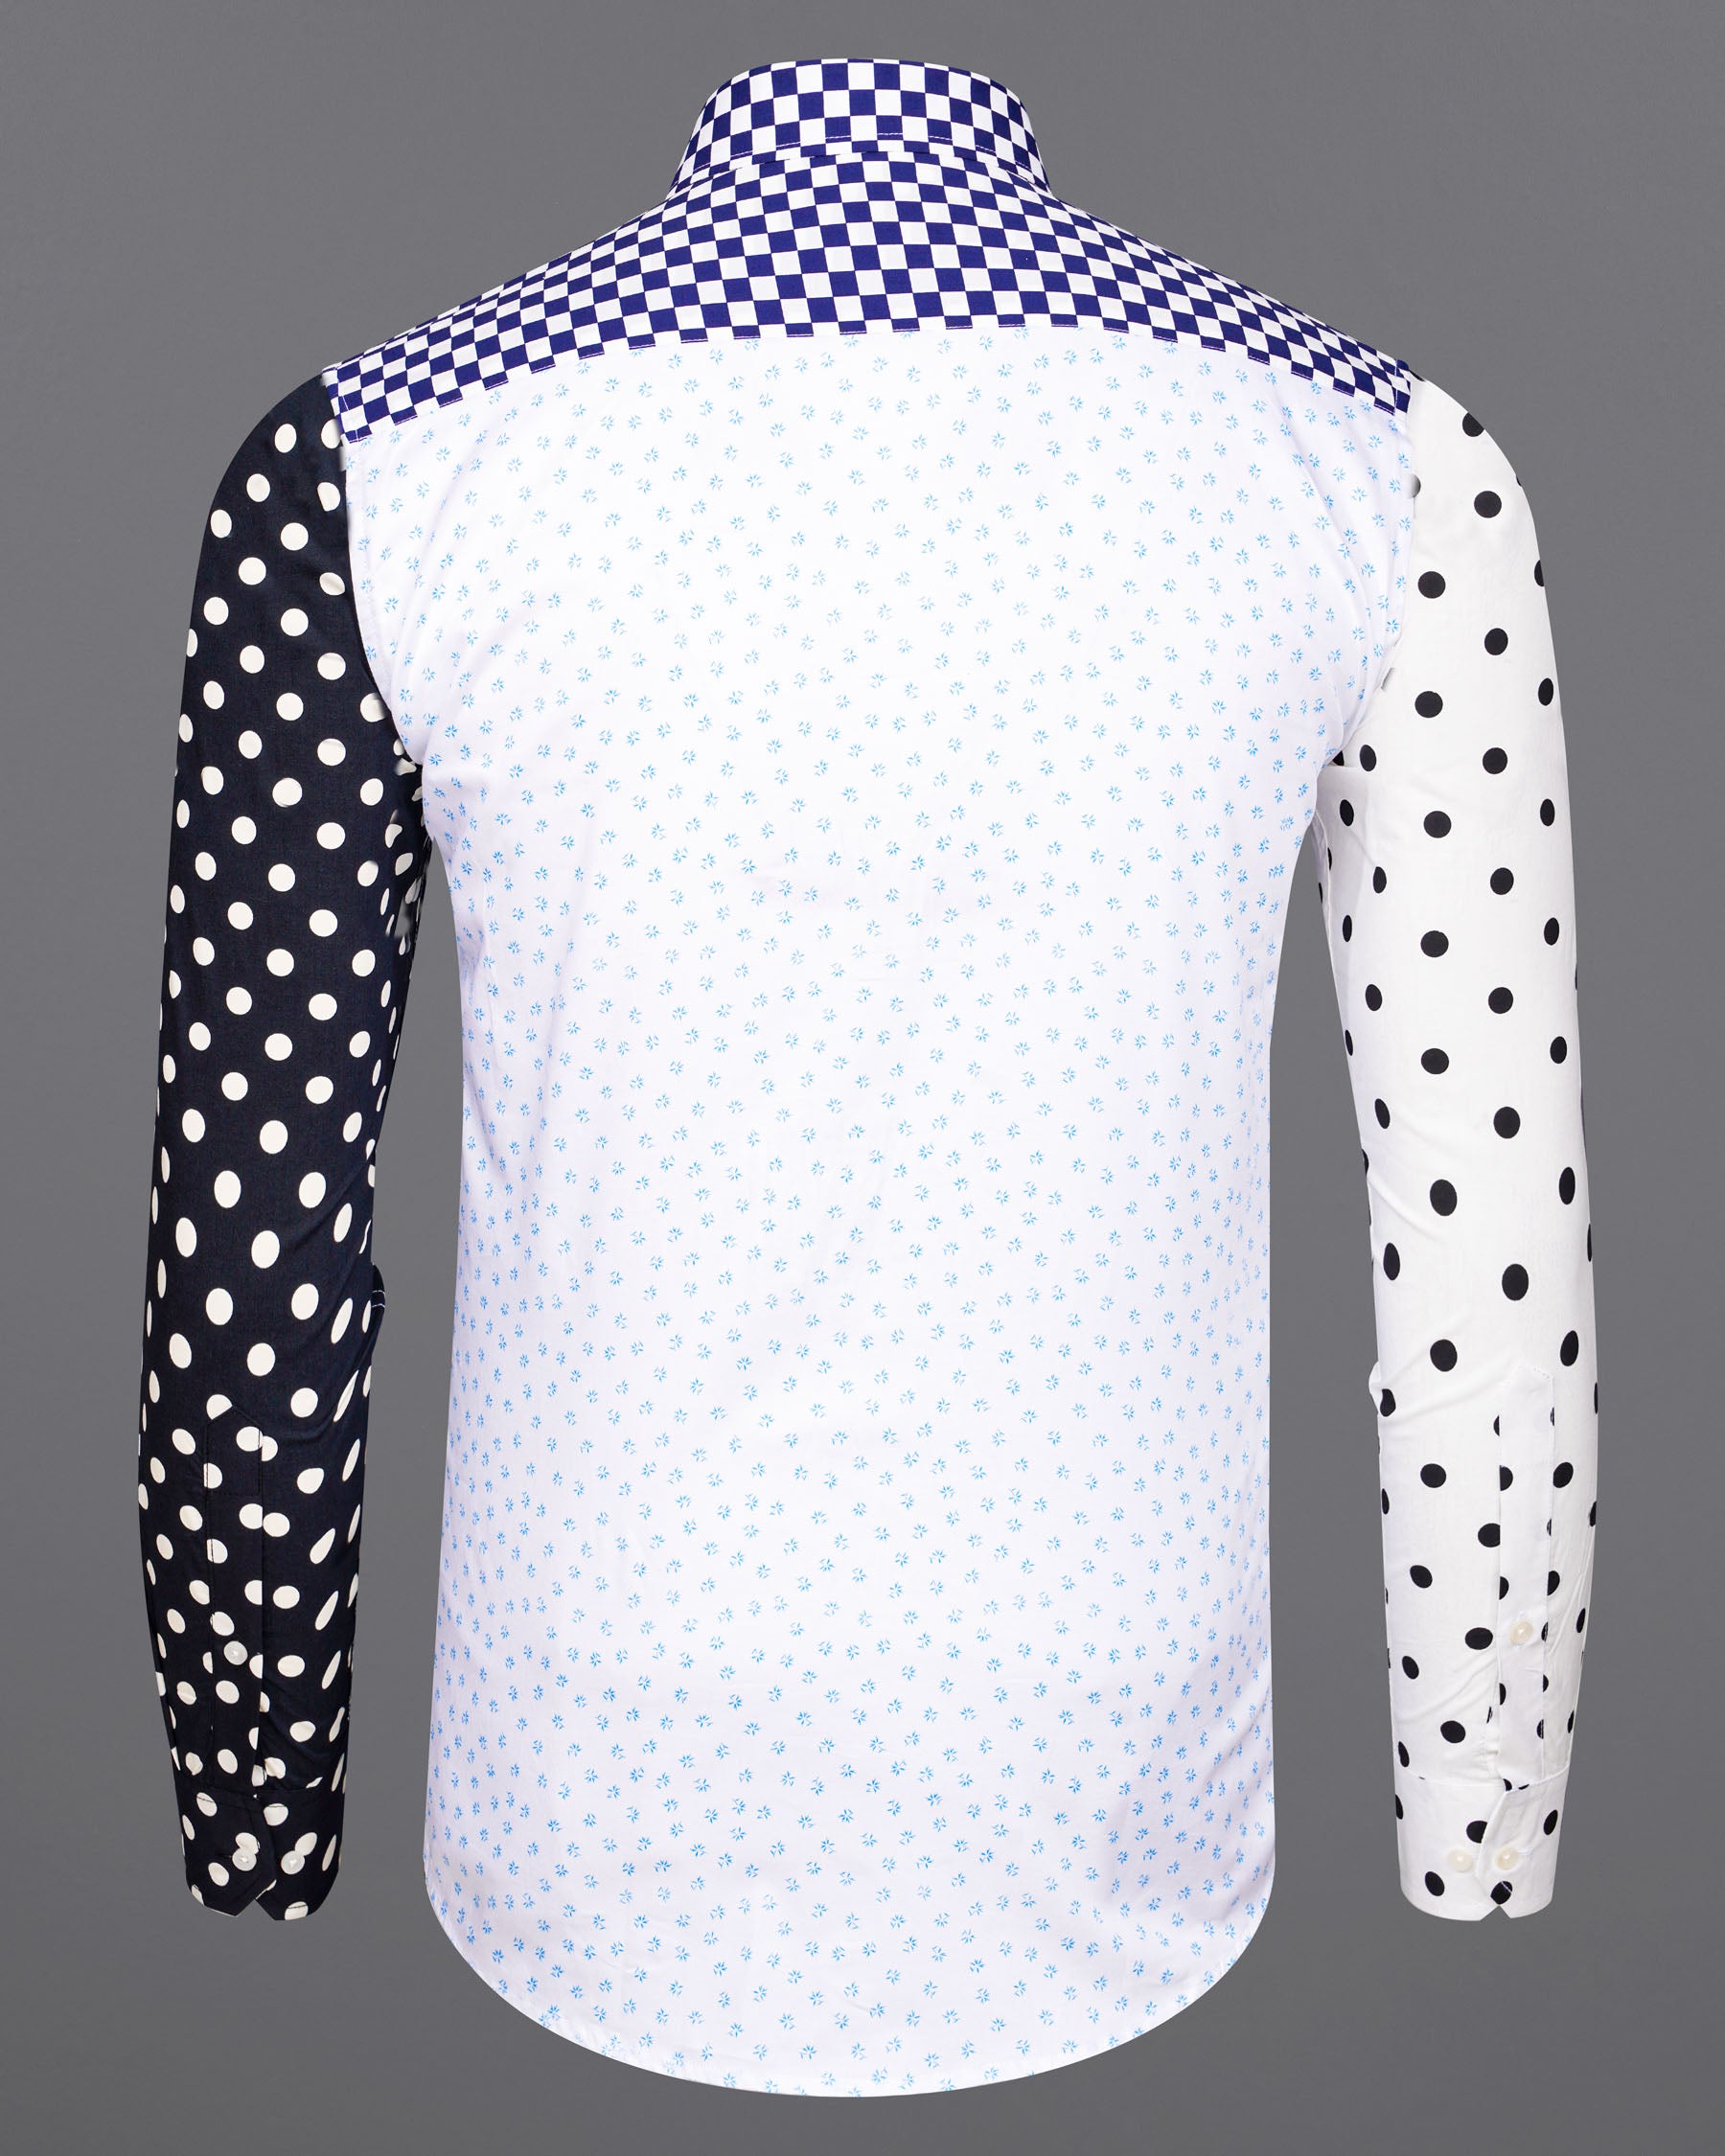 Bright White and Multi Colour Printed Blocking Super Soft Premium Cotton Designer Shirt 7580-38,7580-38,7580-39,7580-39,7580-40,7580-40,7580-42,7580-42,7580-44,7580-44,7580-46,7580-46,7580-48,7580-48,7580-50,7580-50,7580-52,7580-52